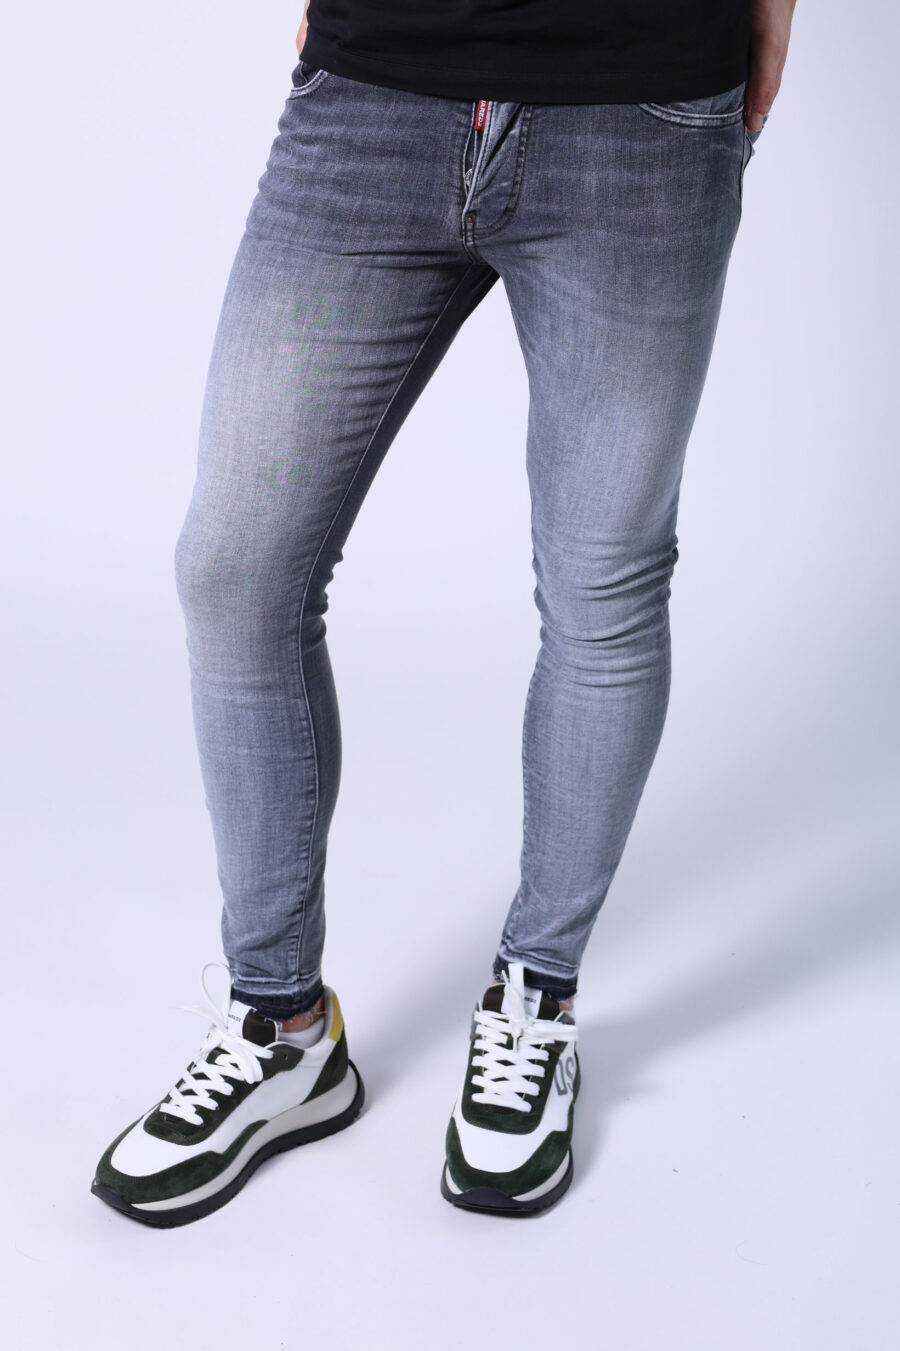 Jeans "skater jean" grau getragen - Untitled Catalog 05640 1